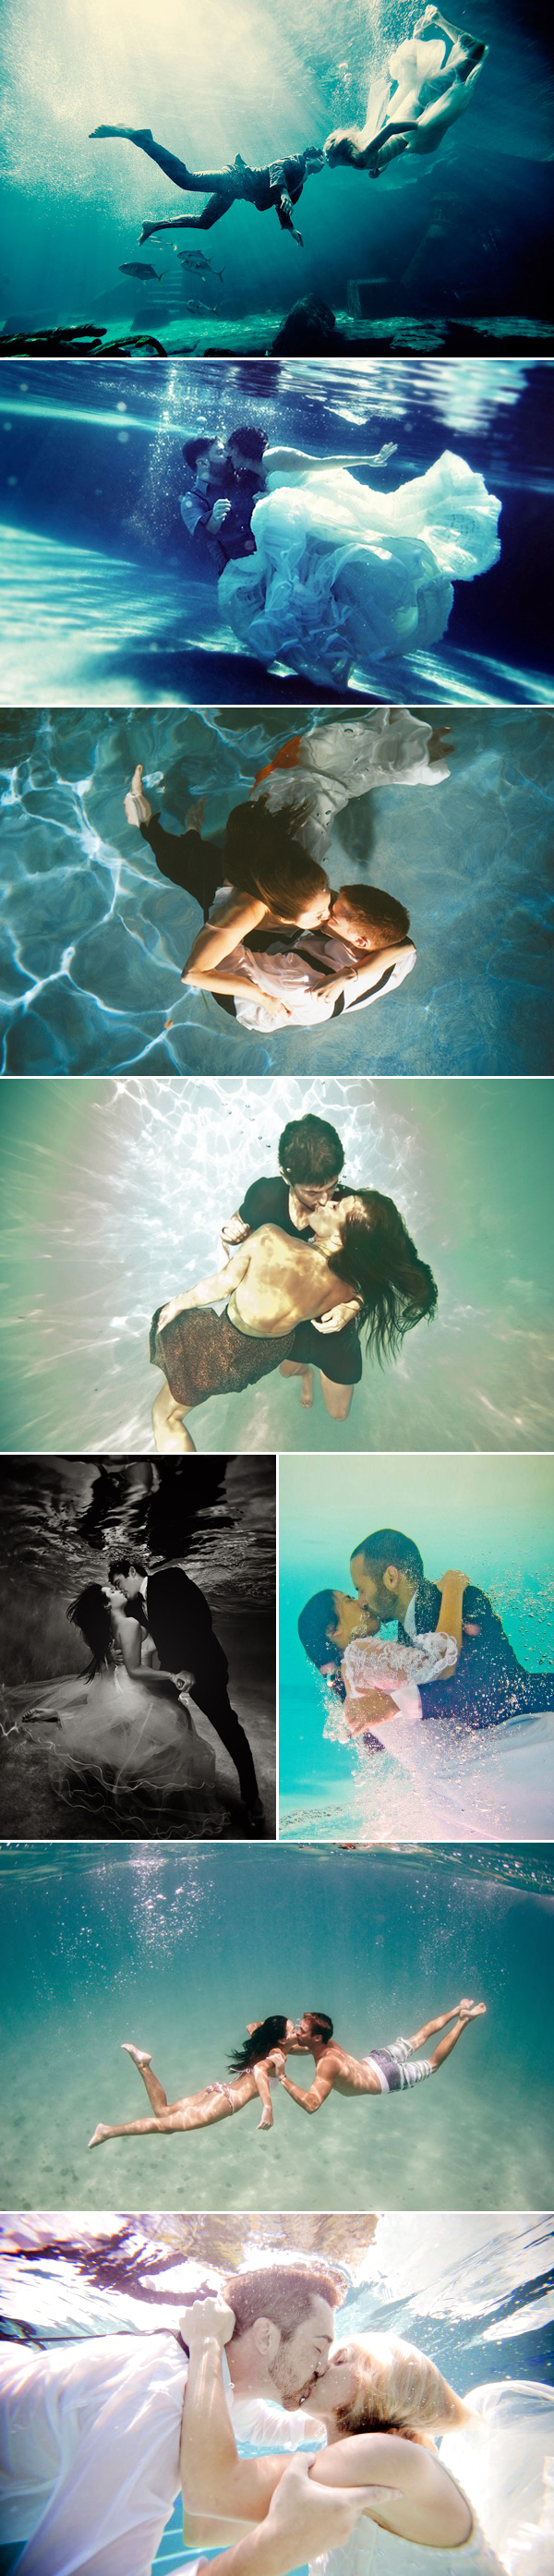 underwater01-romantic